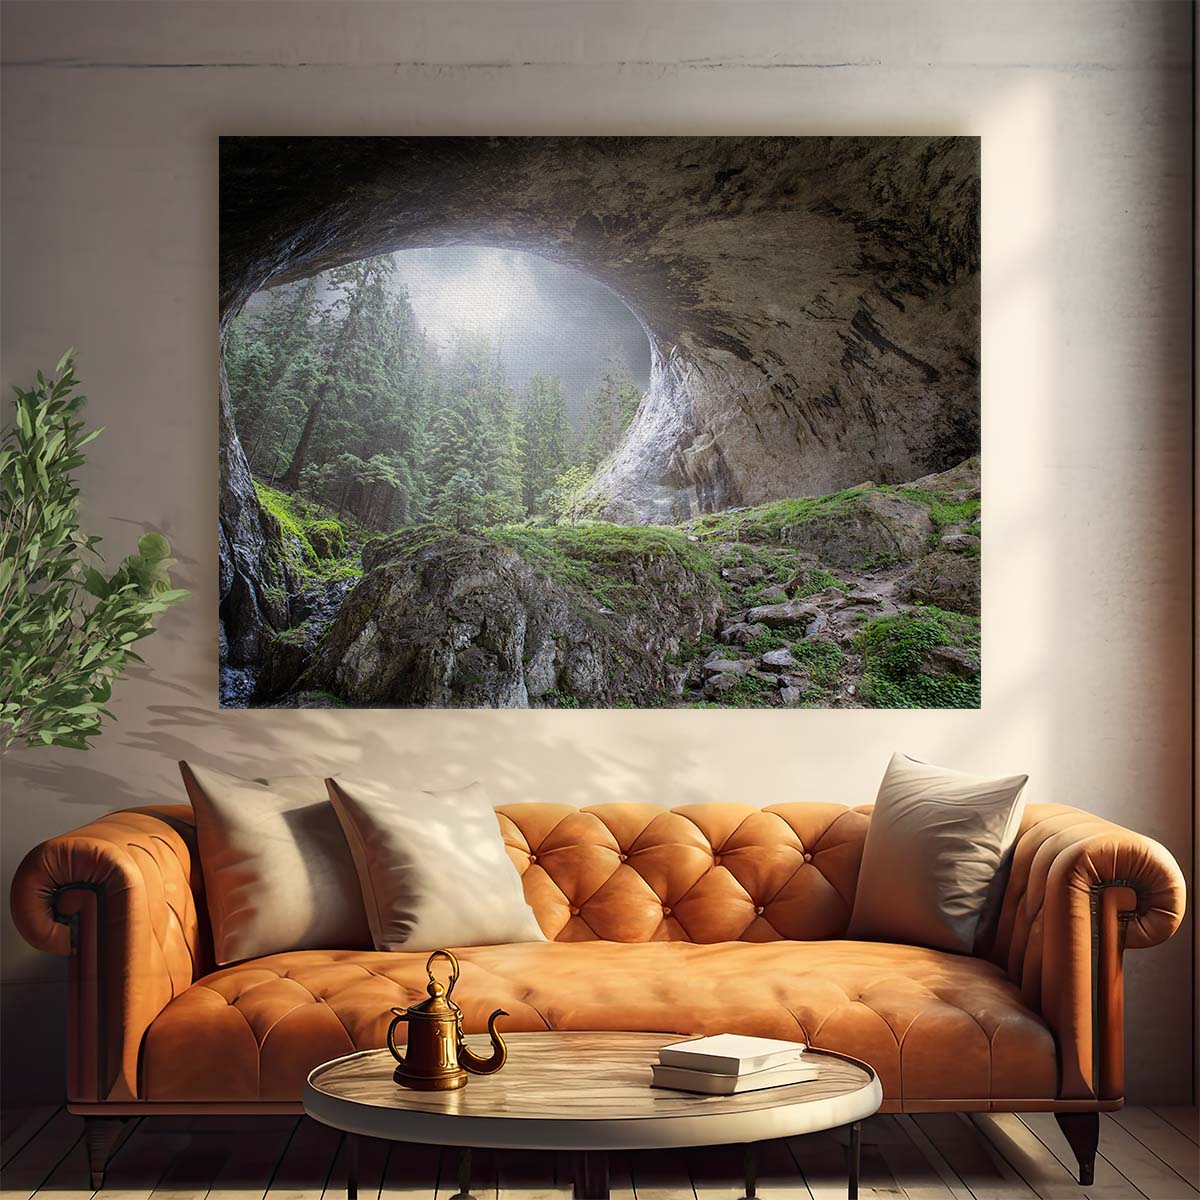 Bulgarian Devetashka Cave Sky Bridge Landscape Wall Art by Luxuriance Designs. Made in USA.